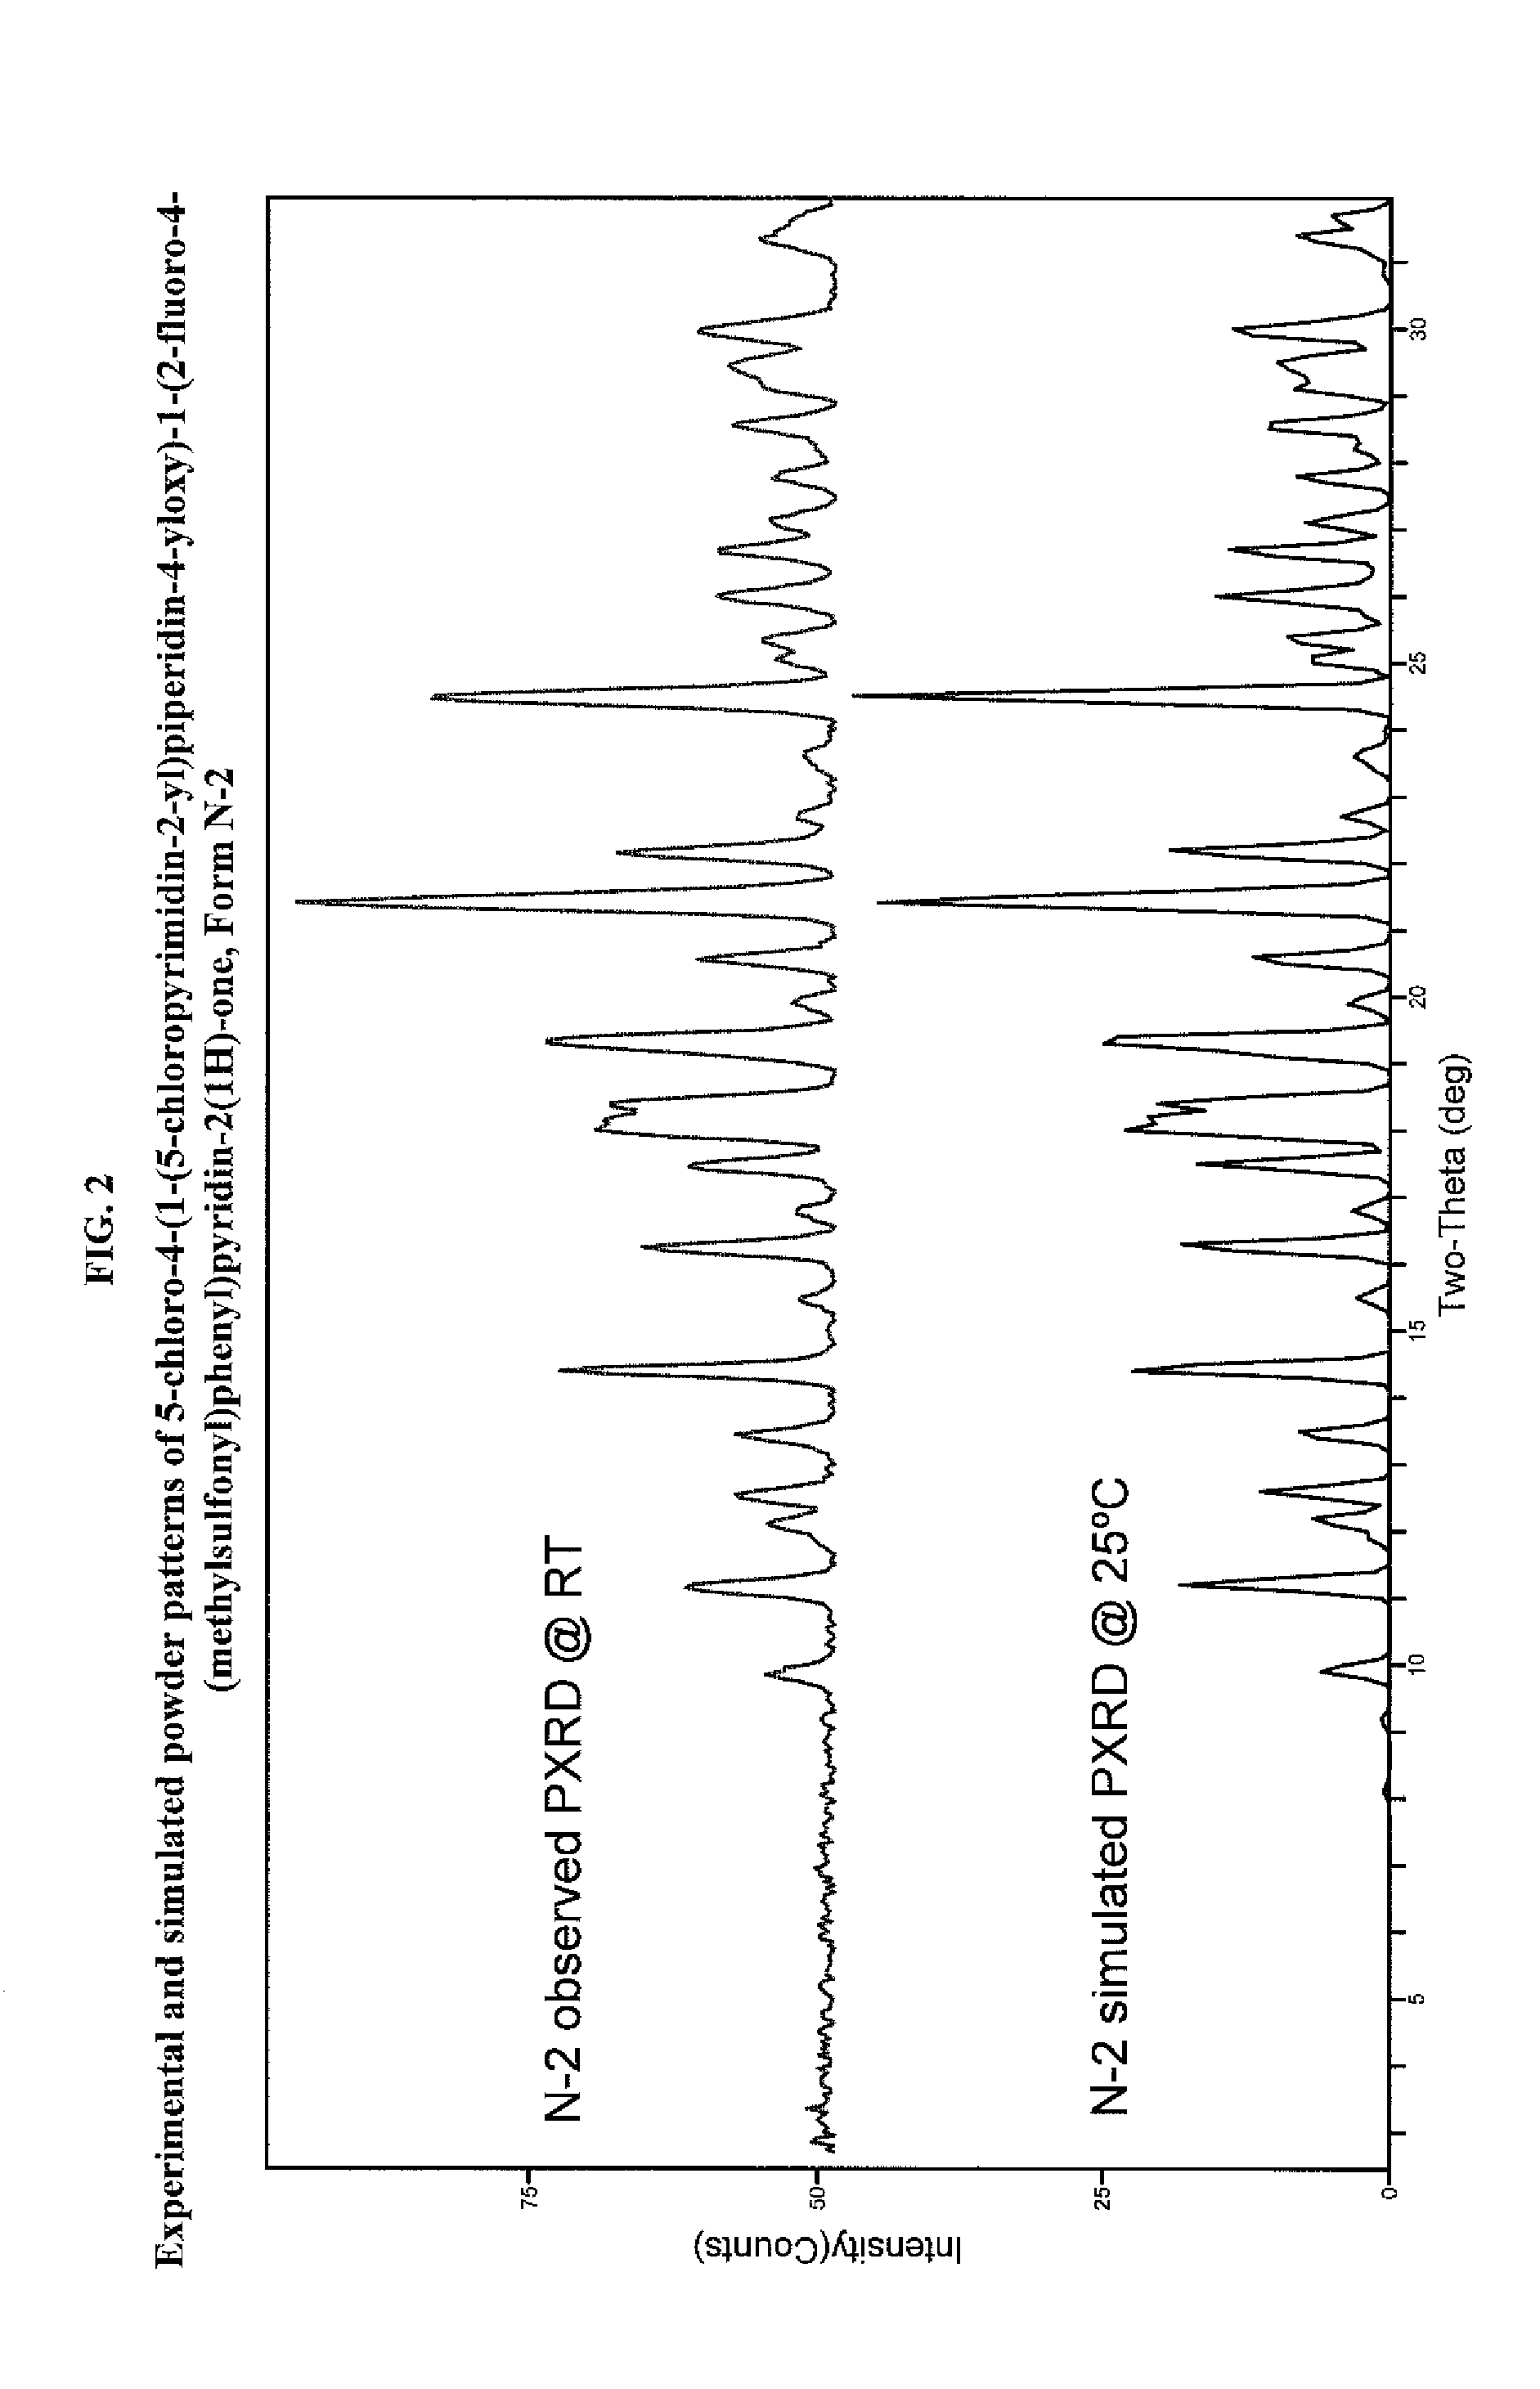 Pyrimidinylpiperidinyloxypyridinone analogues as gpr119 modulators